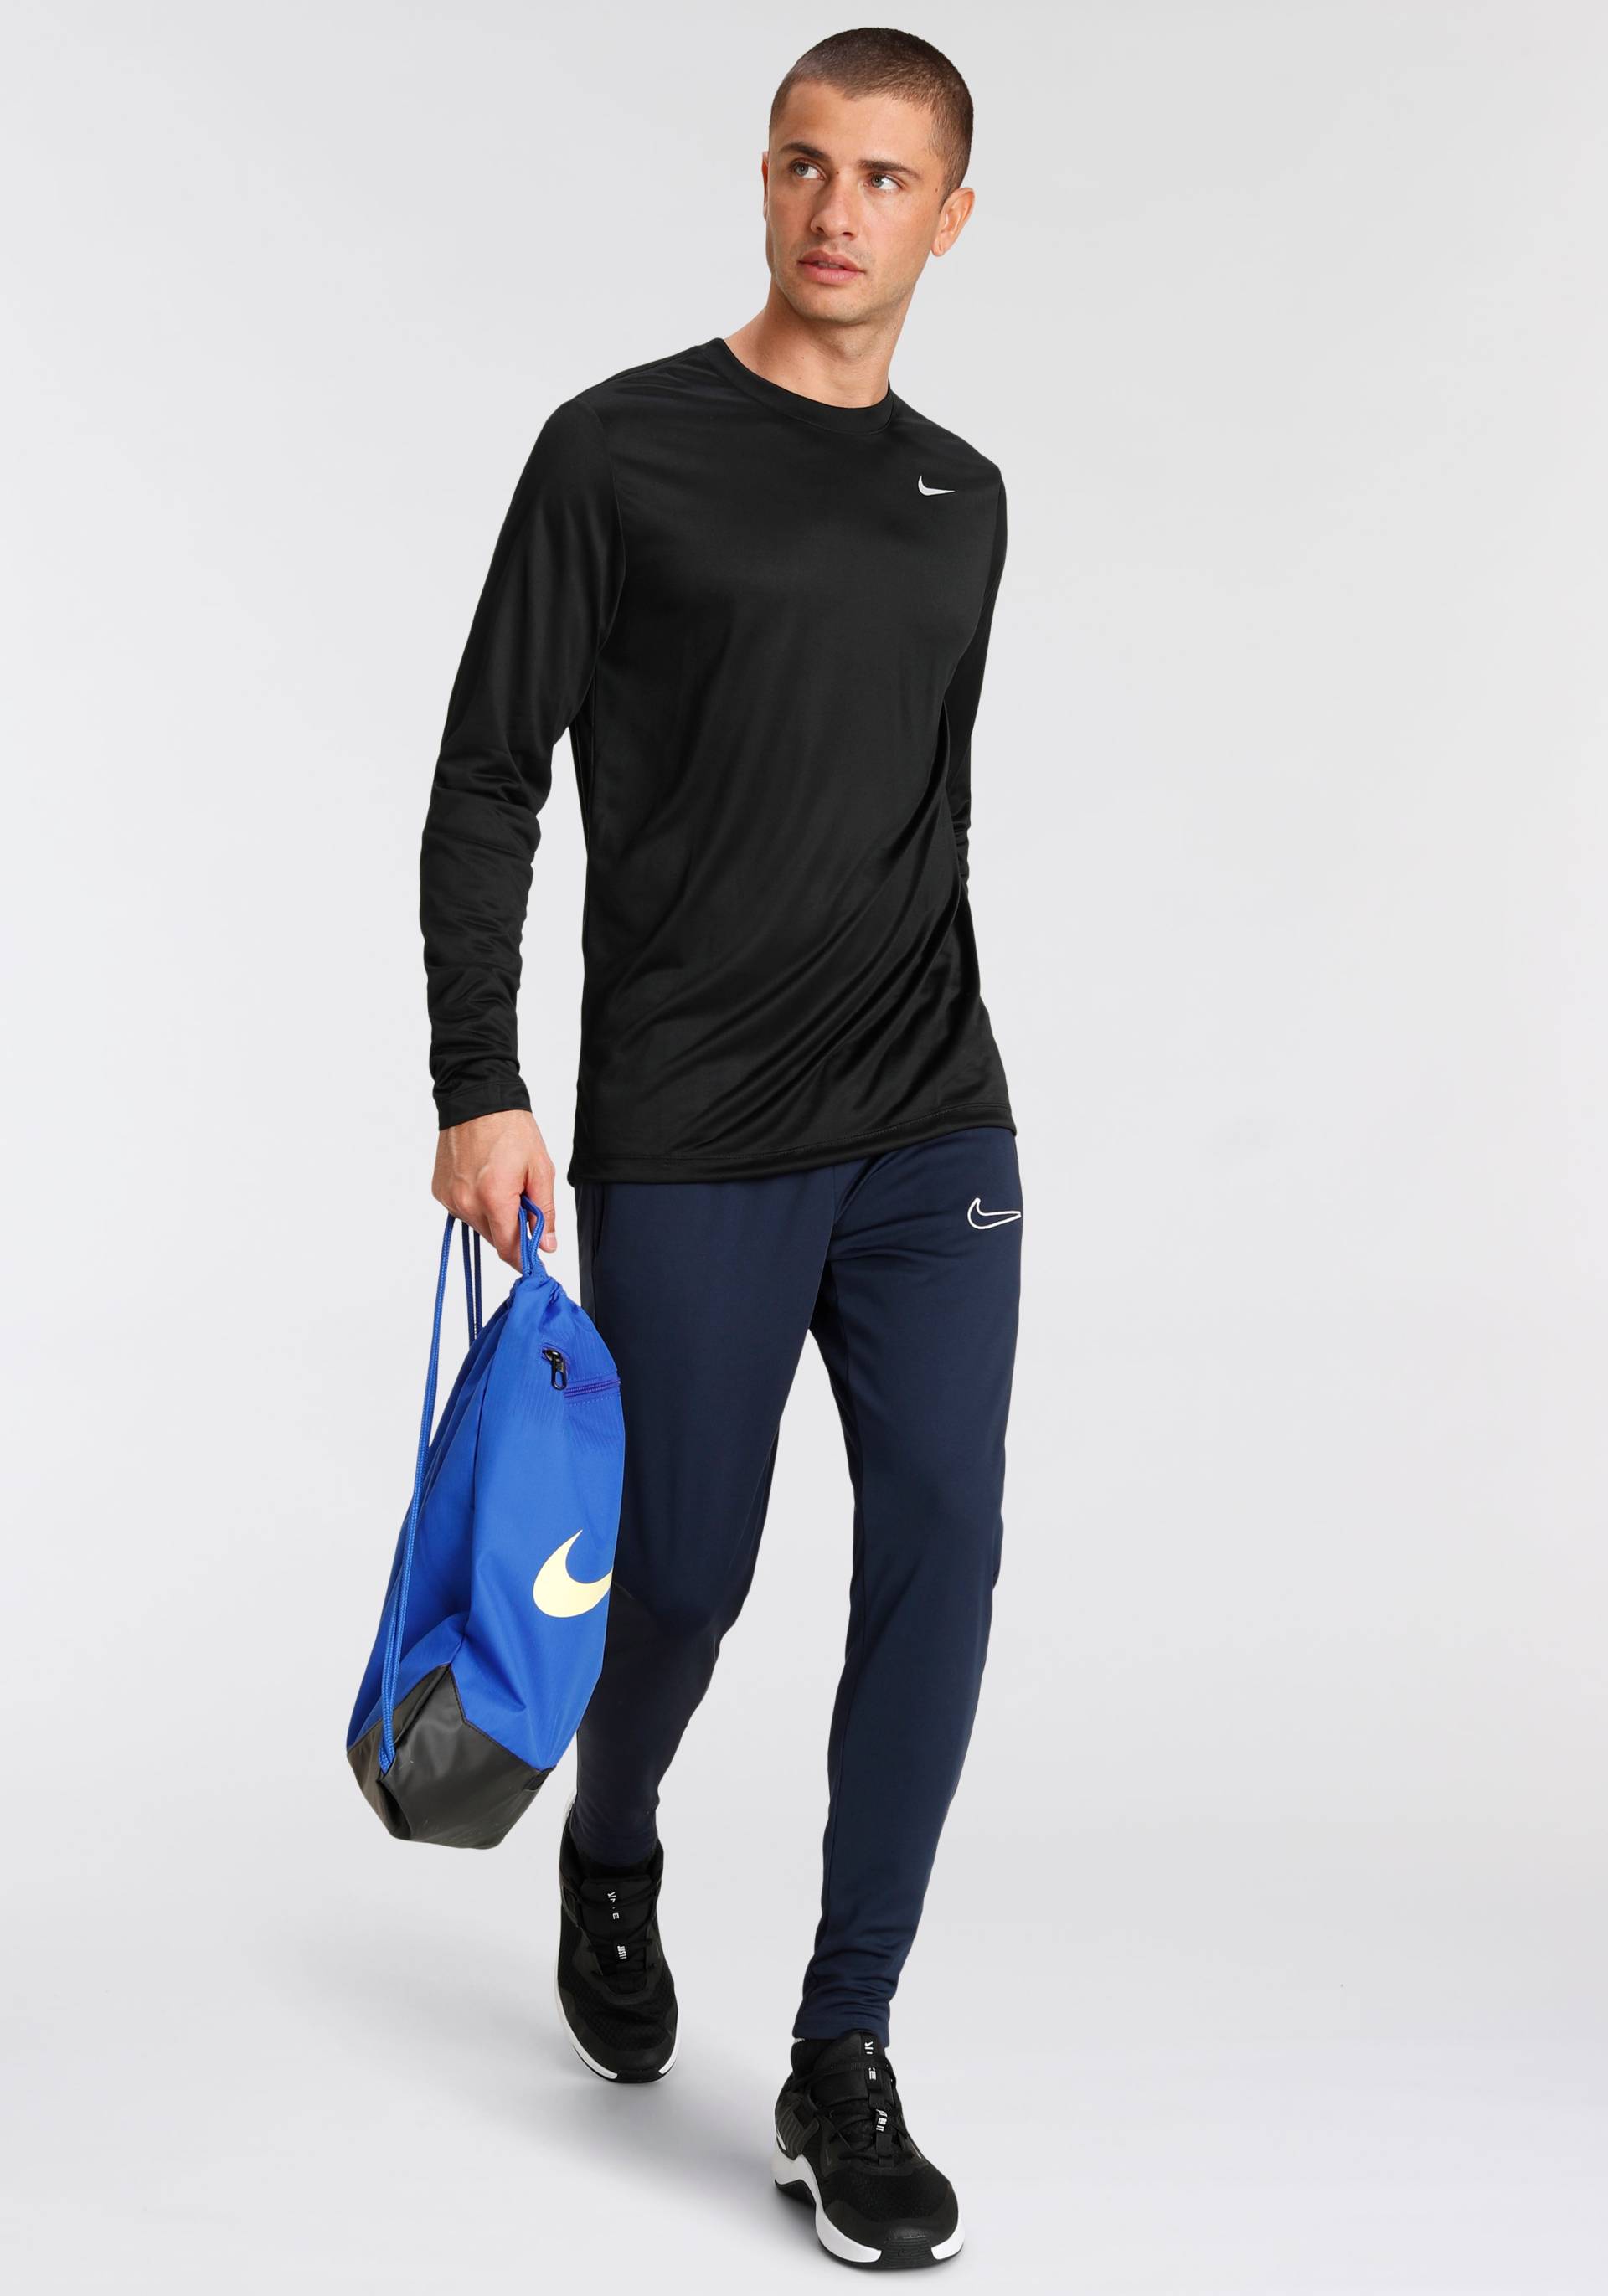 Nike Trainingsshirt »DRI-FIT LEGEND MEN'S LONG-SLEEVE FITNESS TOP« von Nike